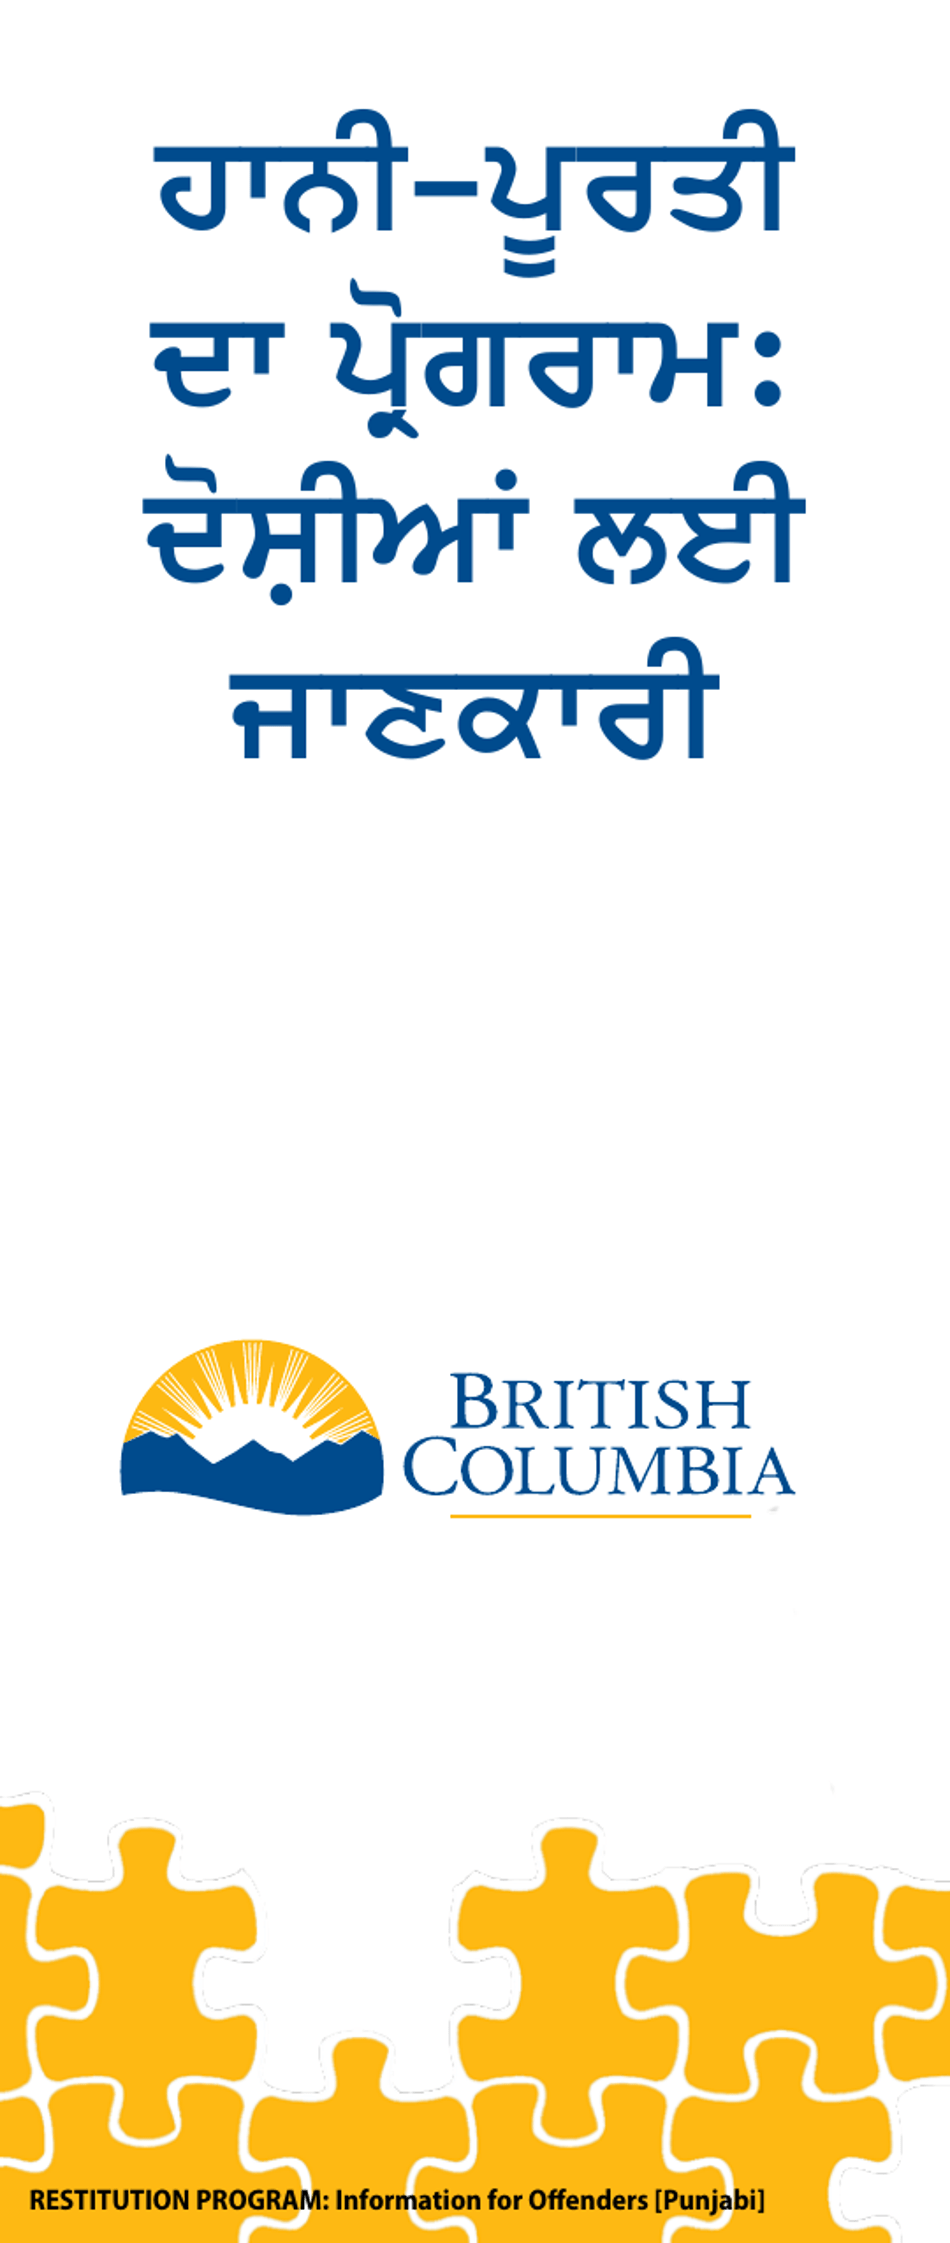 Restitution Program Application Form - British Columbia, Canada (English / Punjabi), Page 1